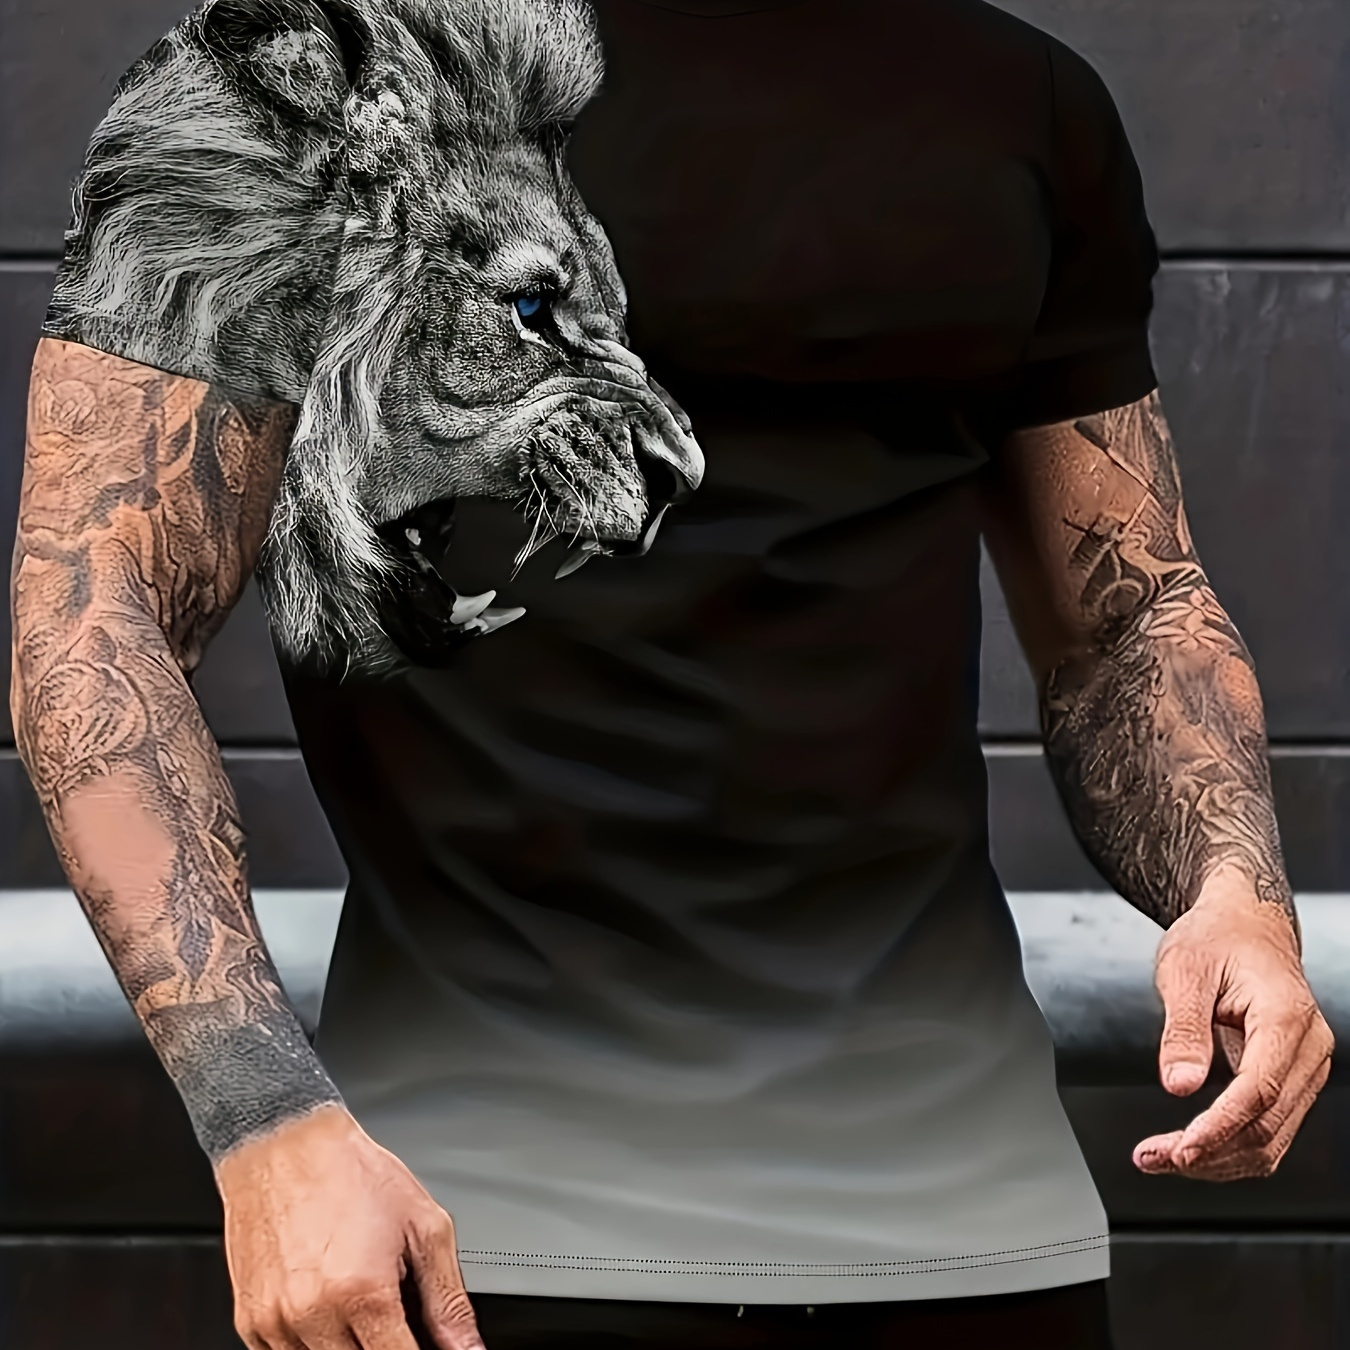 

Fierce Lion 3d Print Crew Neck T-shirt For Men, Casual Gradient Short Sleeve Top, Men's Novelty Tee For Summer Outing